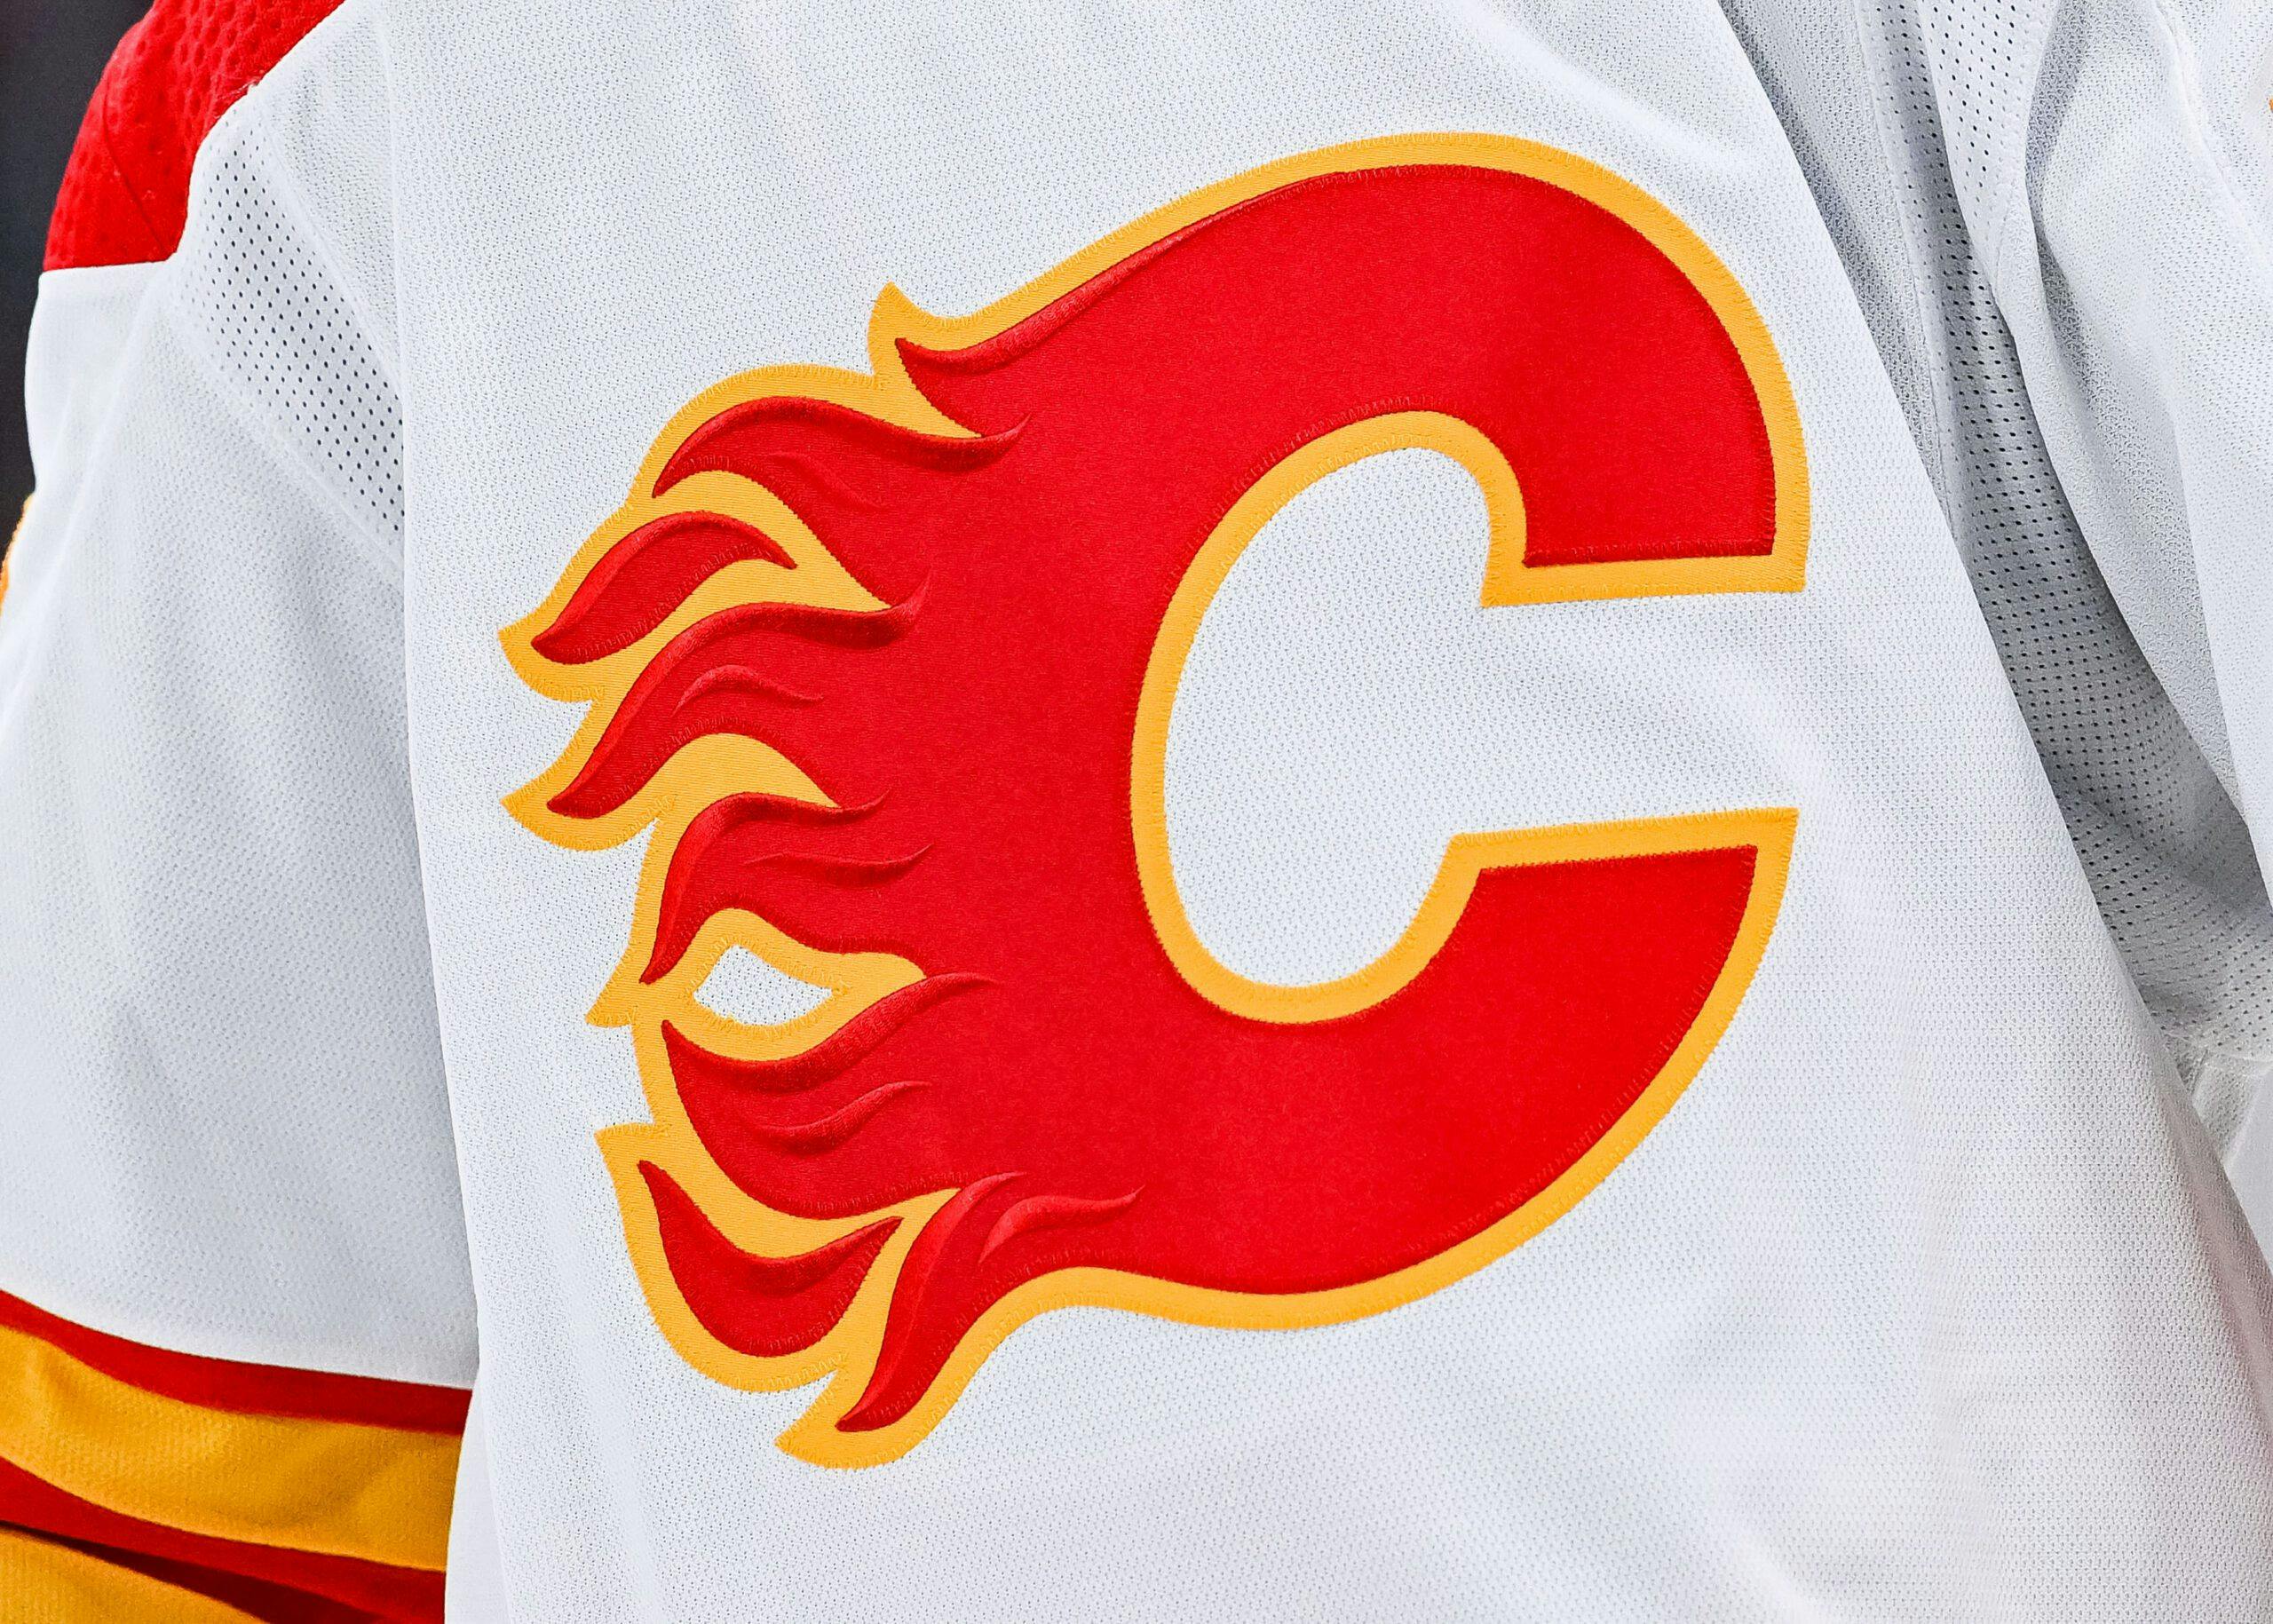 Calgary Flames to name Craig Conroy next general manager